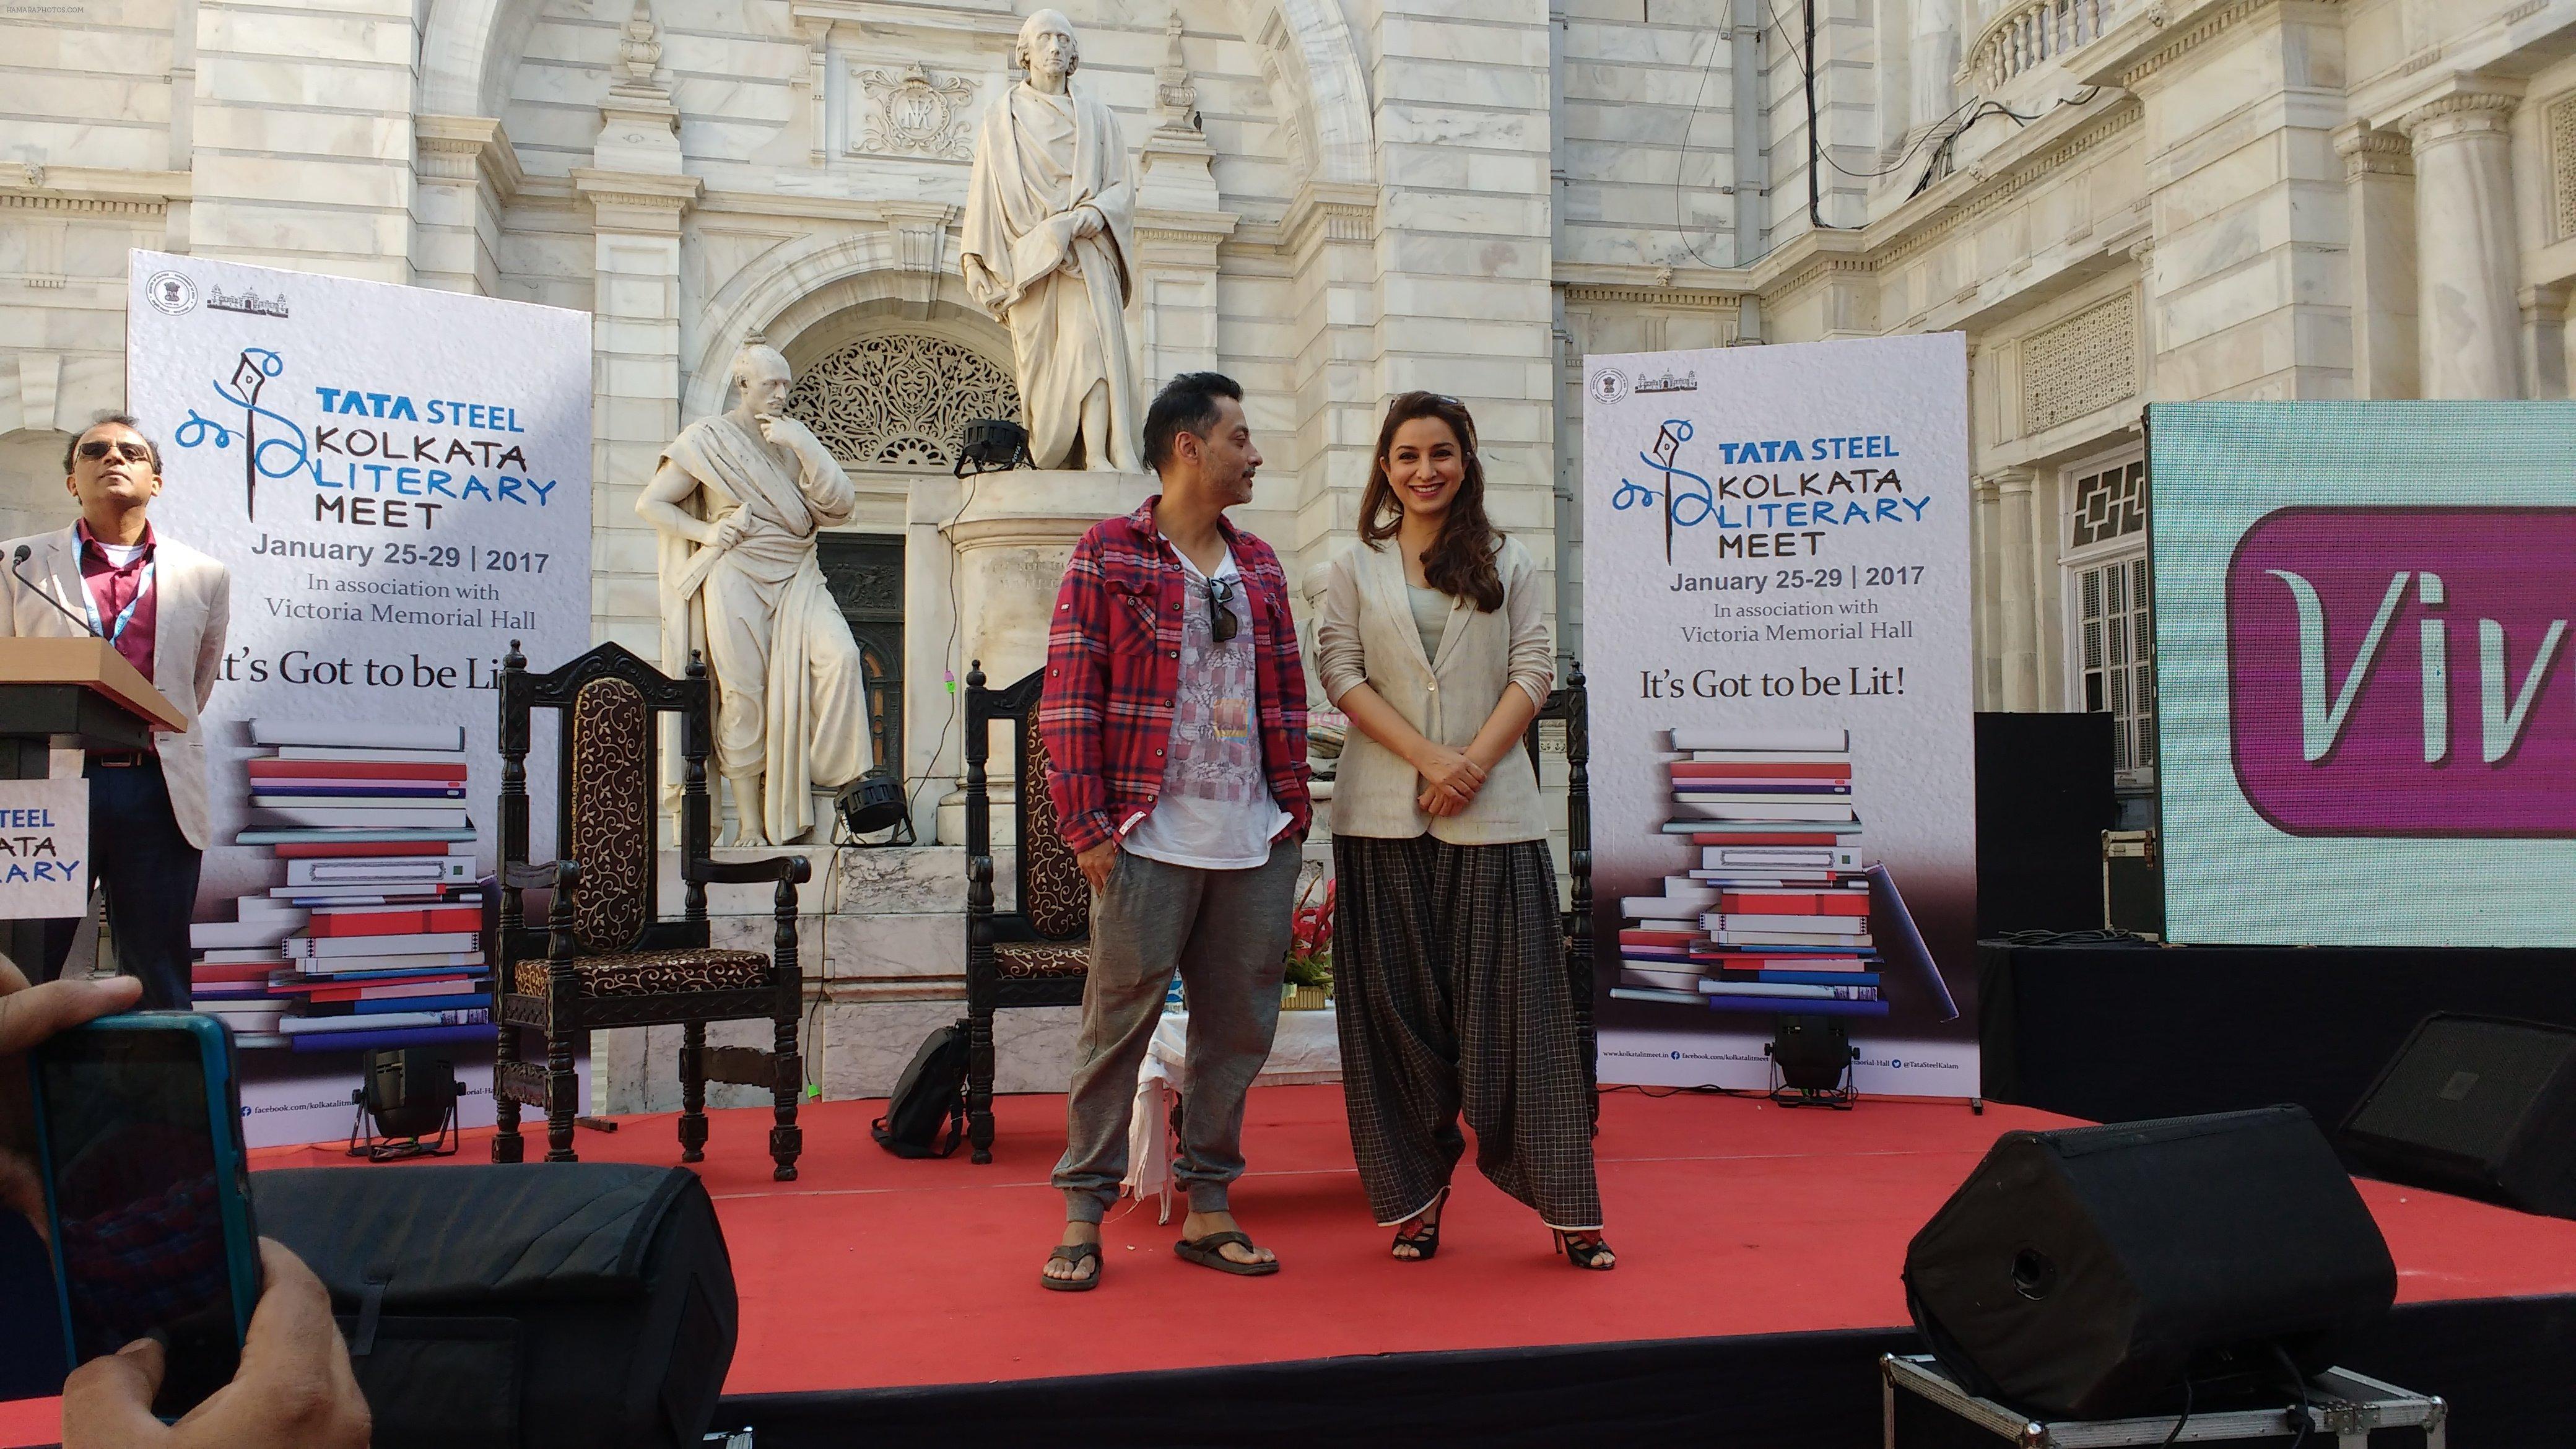 Tisca Chopra at Kolkata Literary meet on 29th Jan 2017